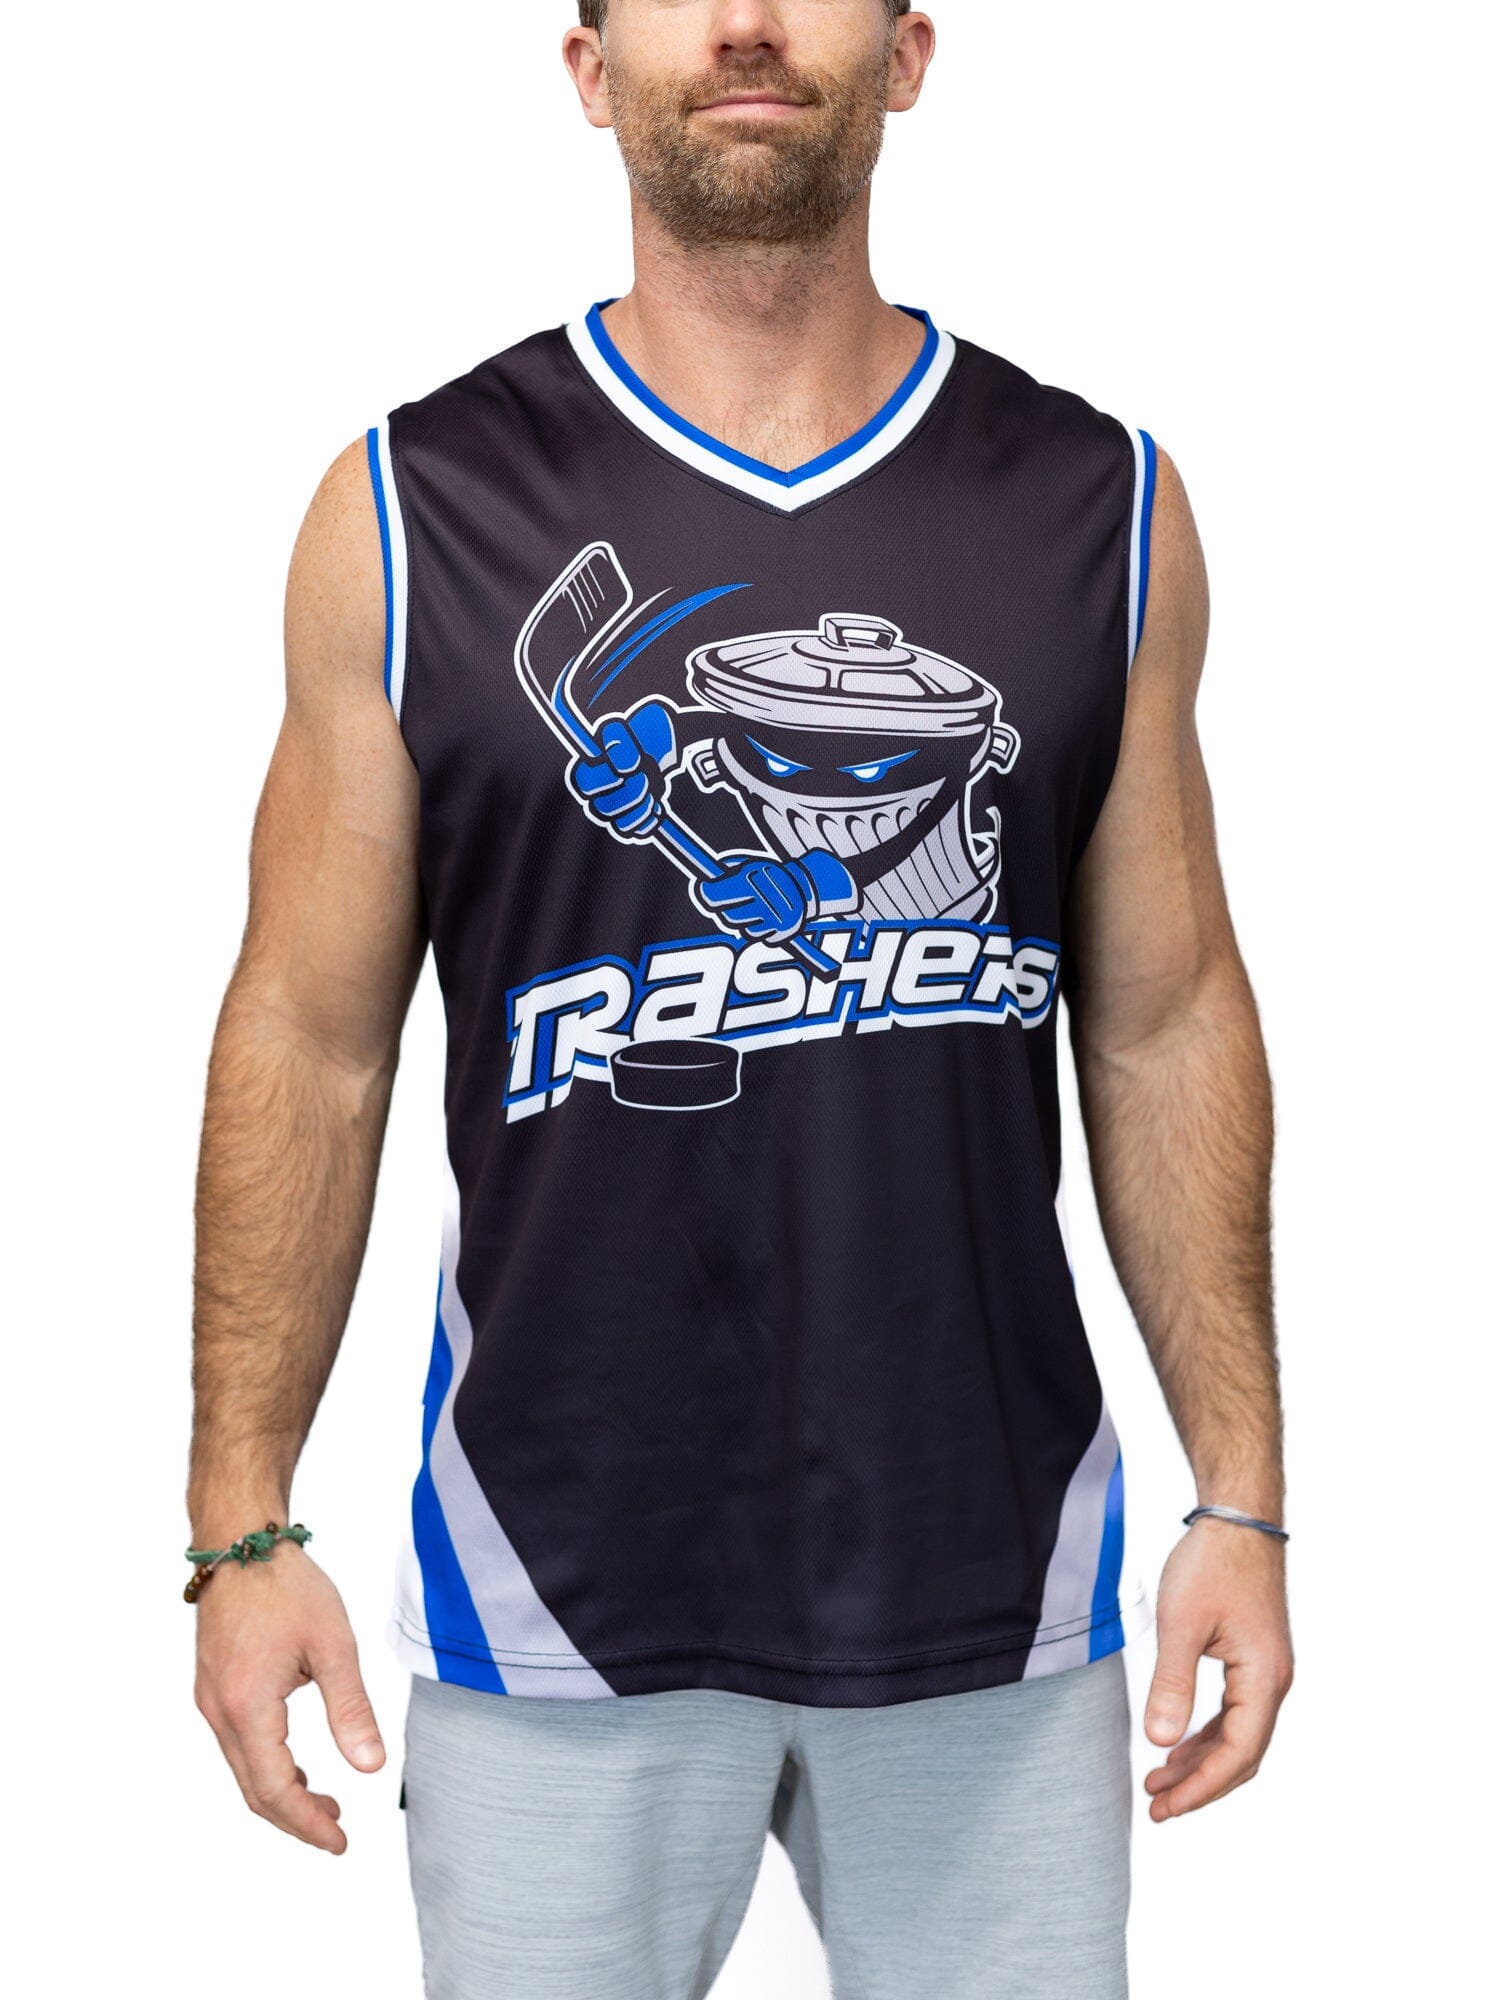 HOT SALE!!! Danbury Trashers Hockey Main Black Unisex T-Shirt Size S-5XL